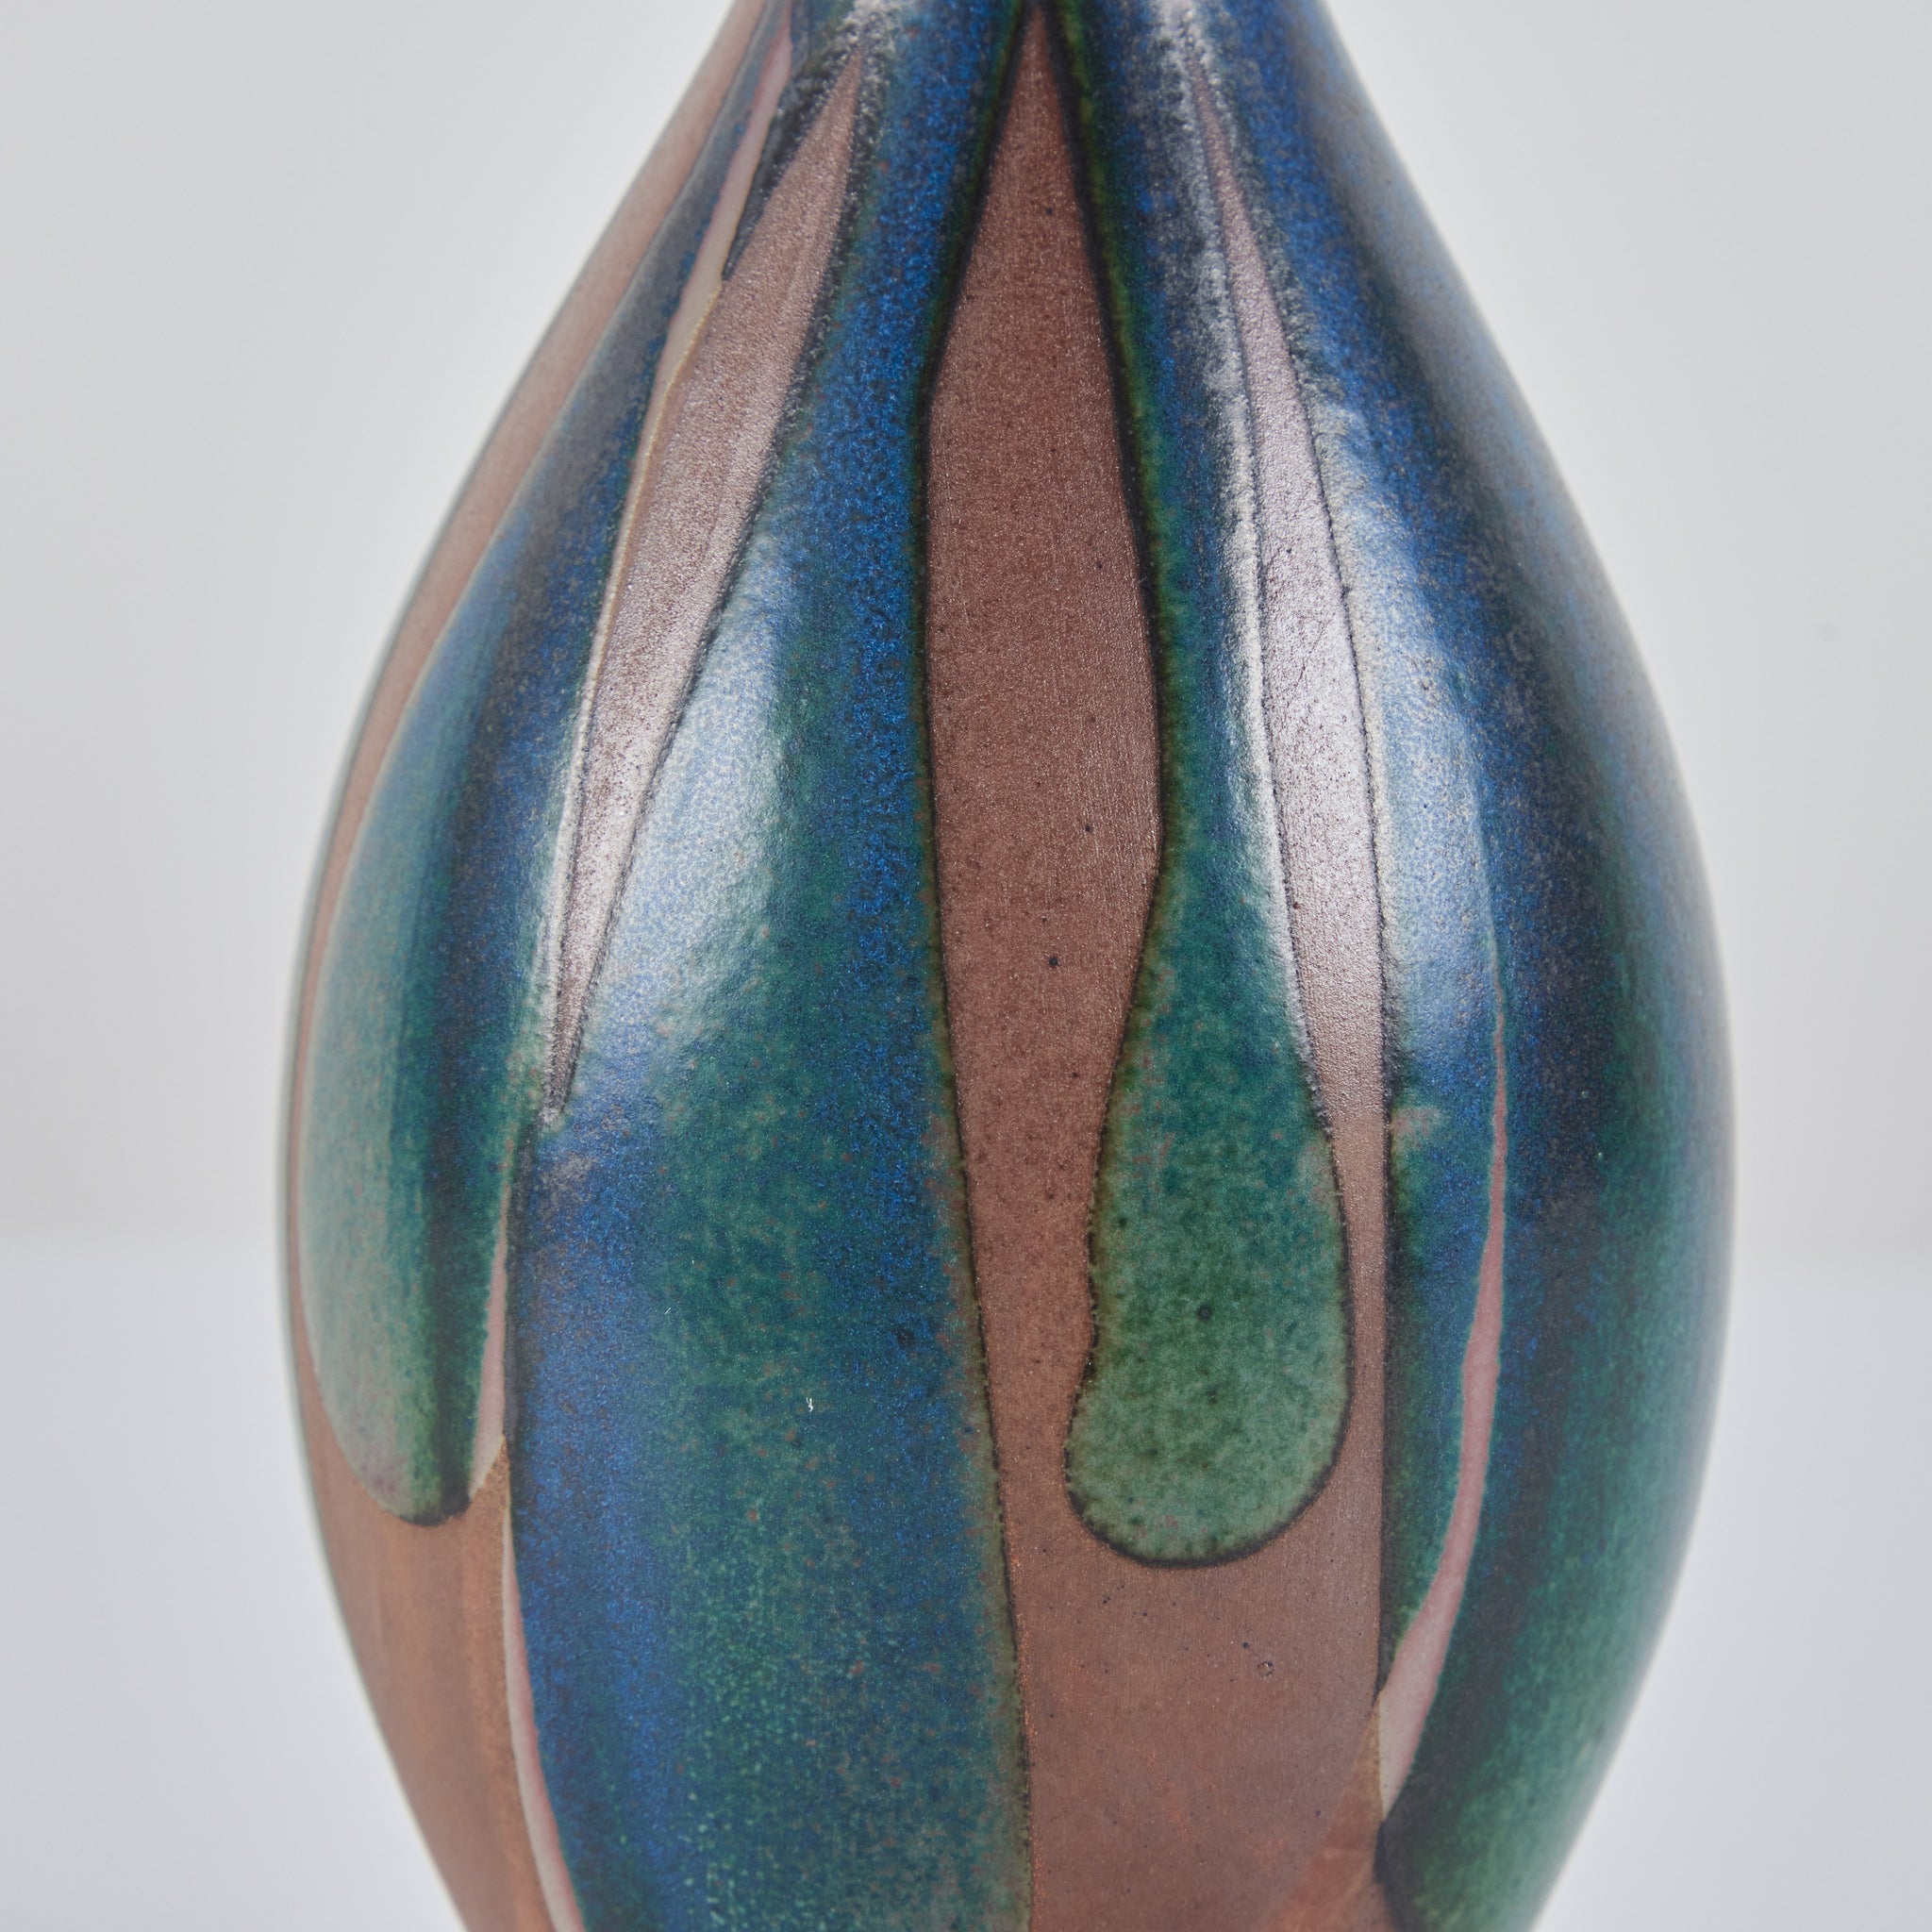 Robert Maxwell Stoneware Glazed Vase